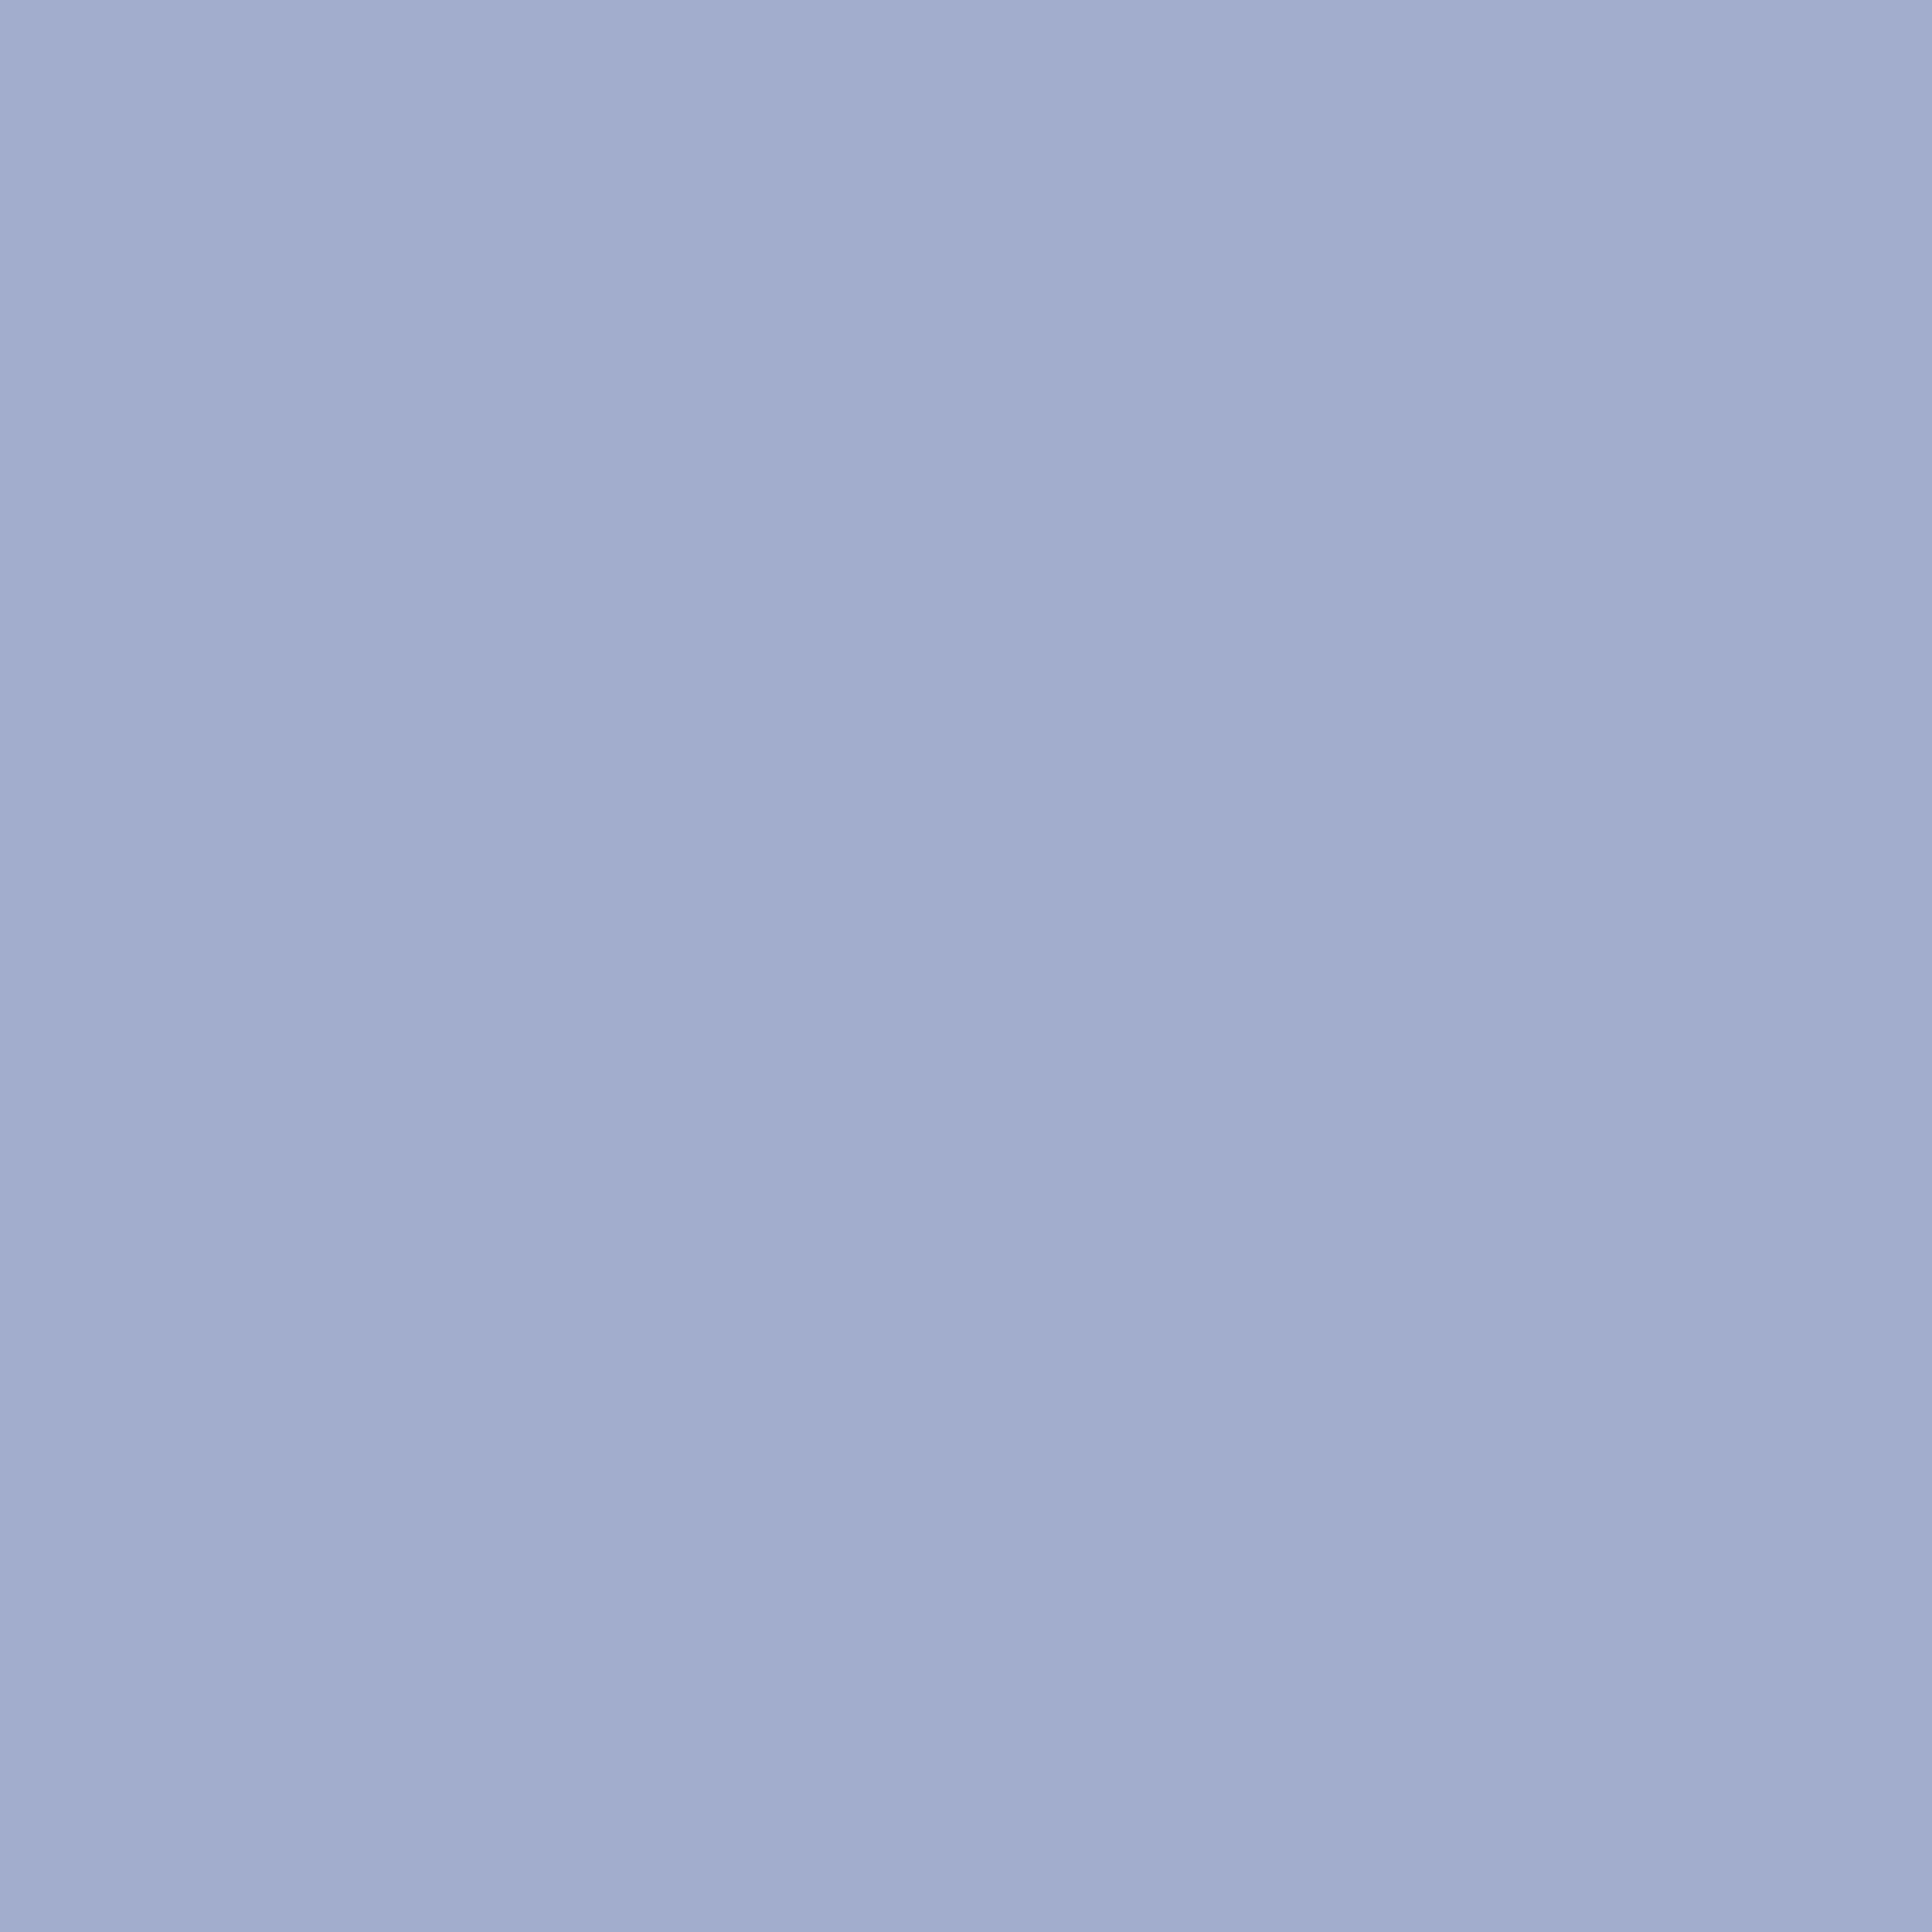 3600x3600 Wild Blue Yonder Solid Color Background